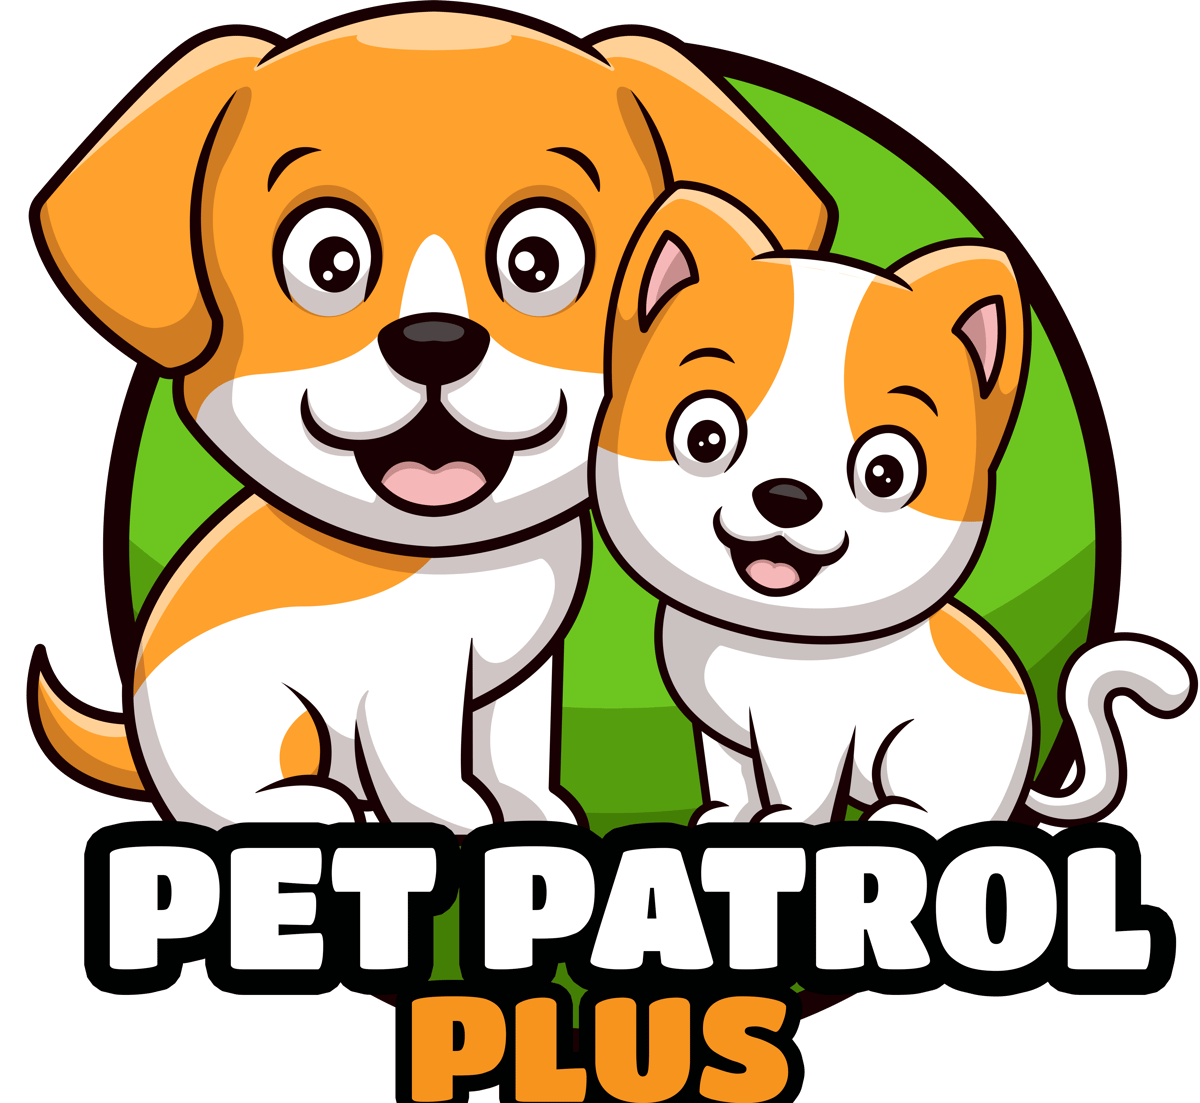 Pet Patrol plus new